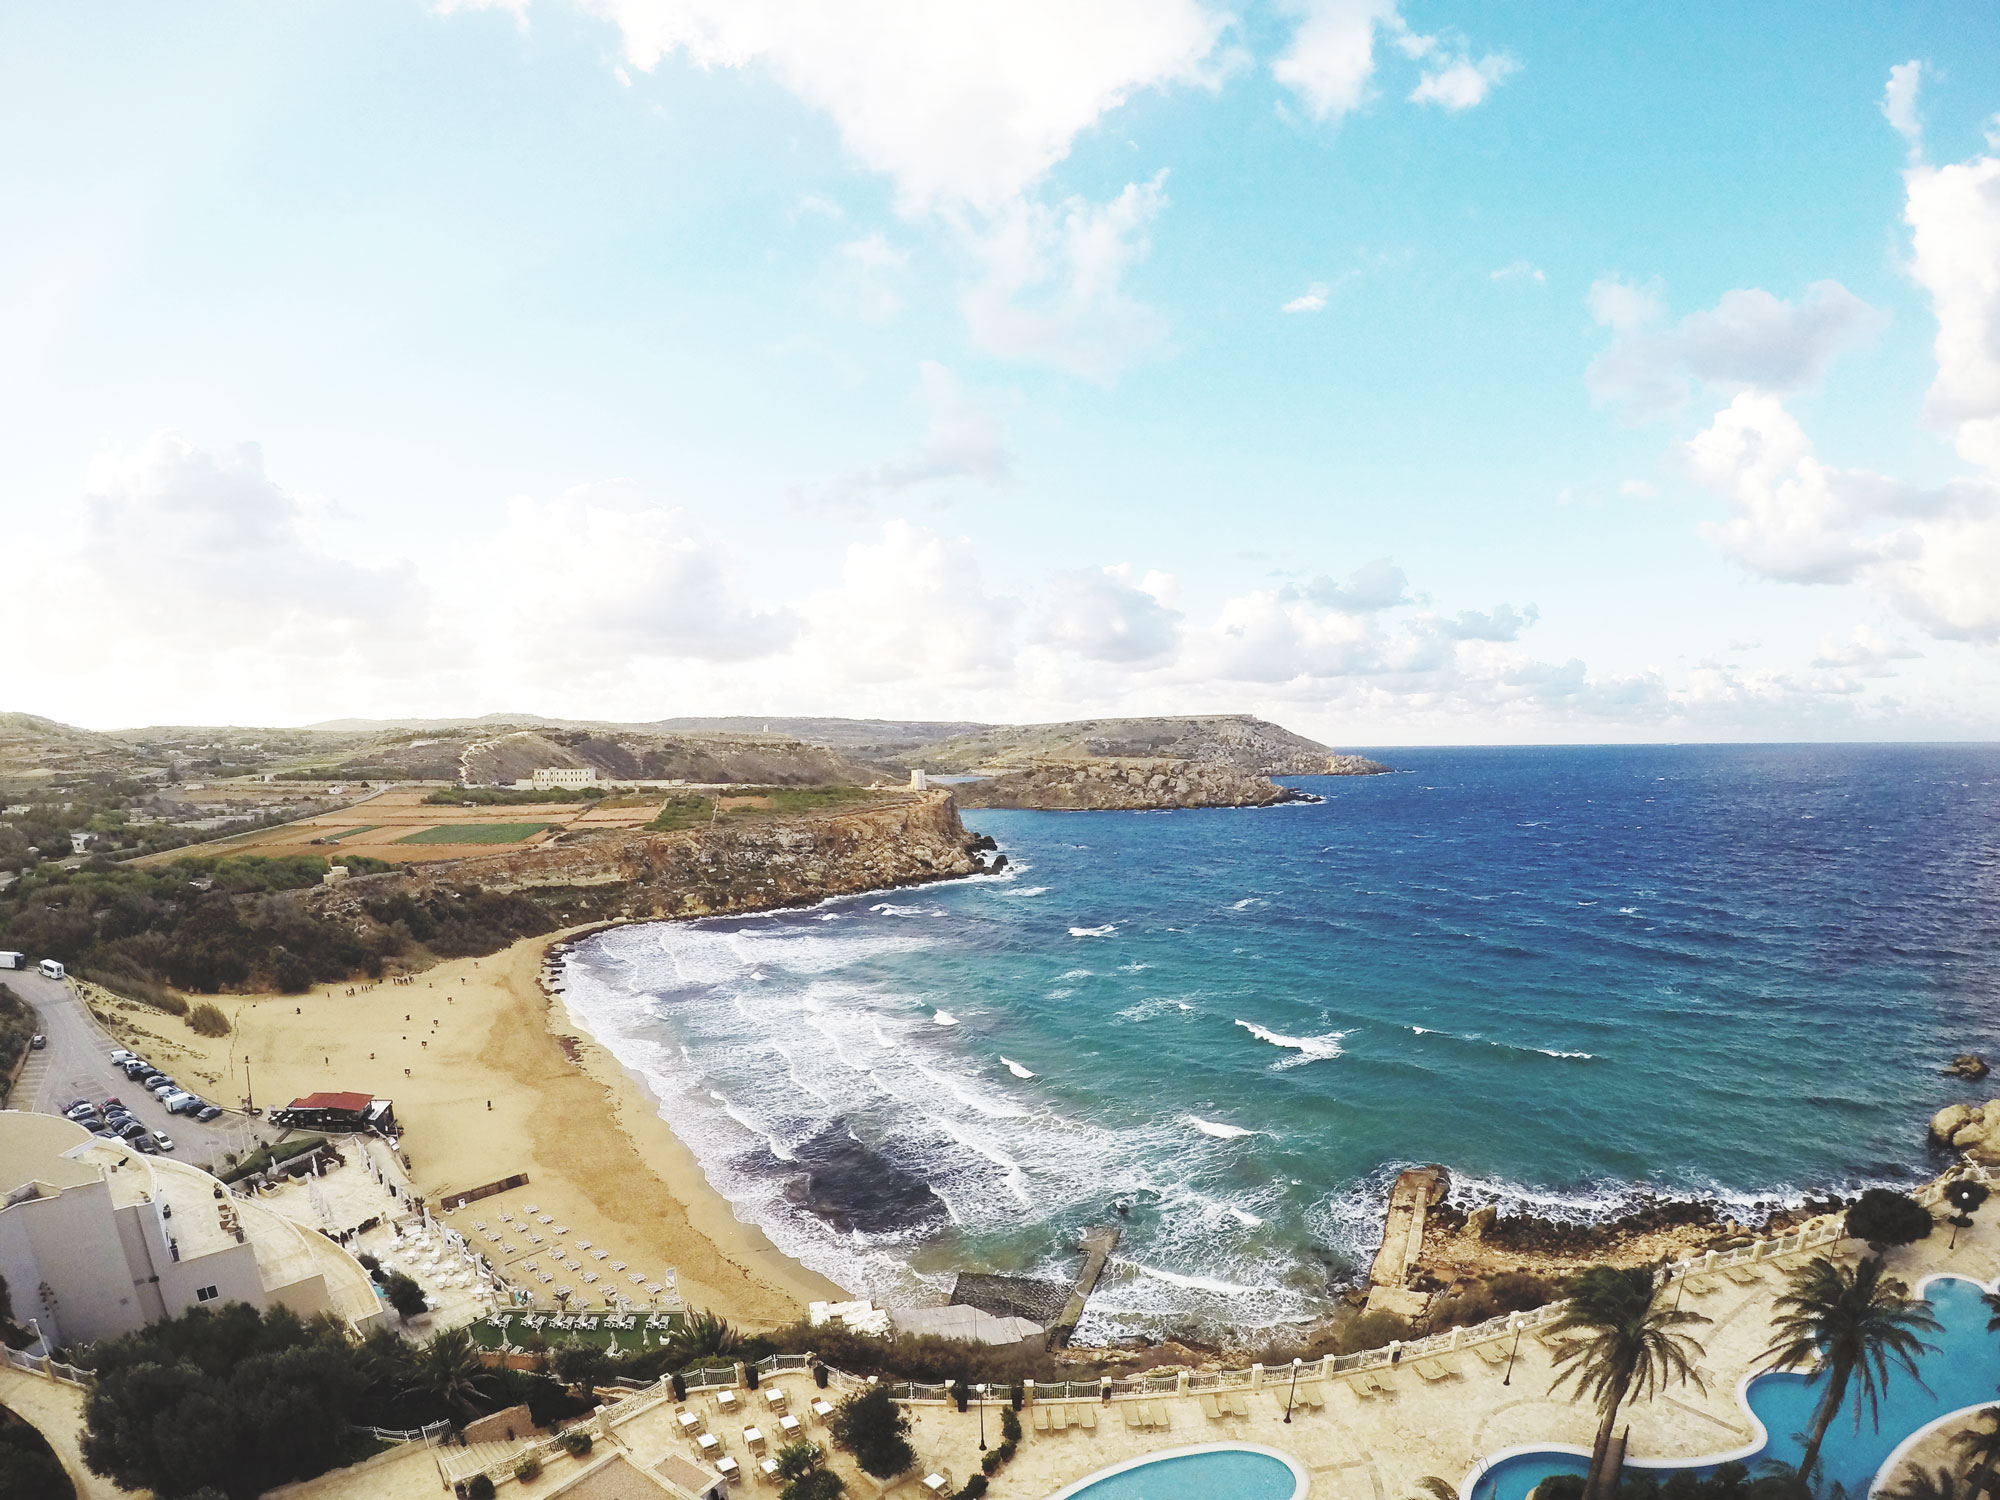 Styleat30 Blog - Radisson Blu Hotel Review - Malta, Golden Sands Holiday - 09